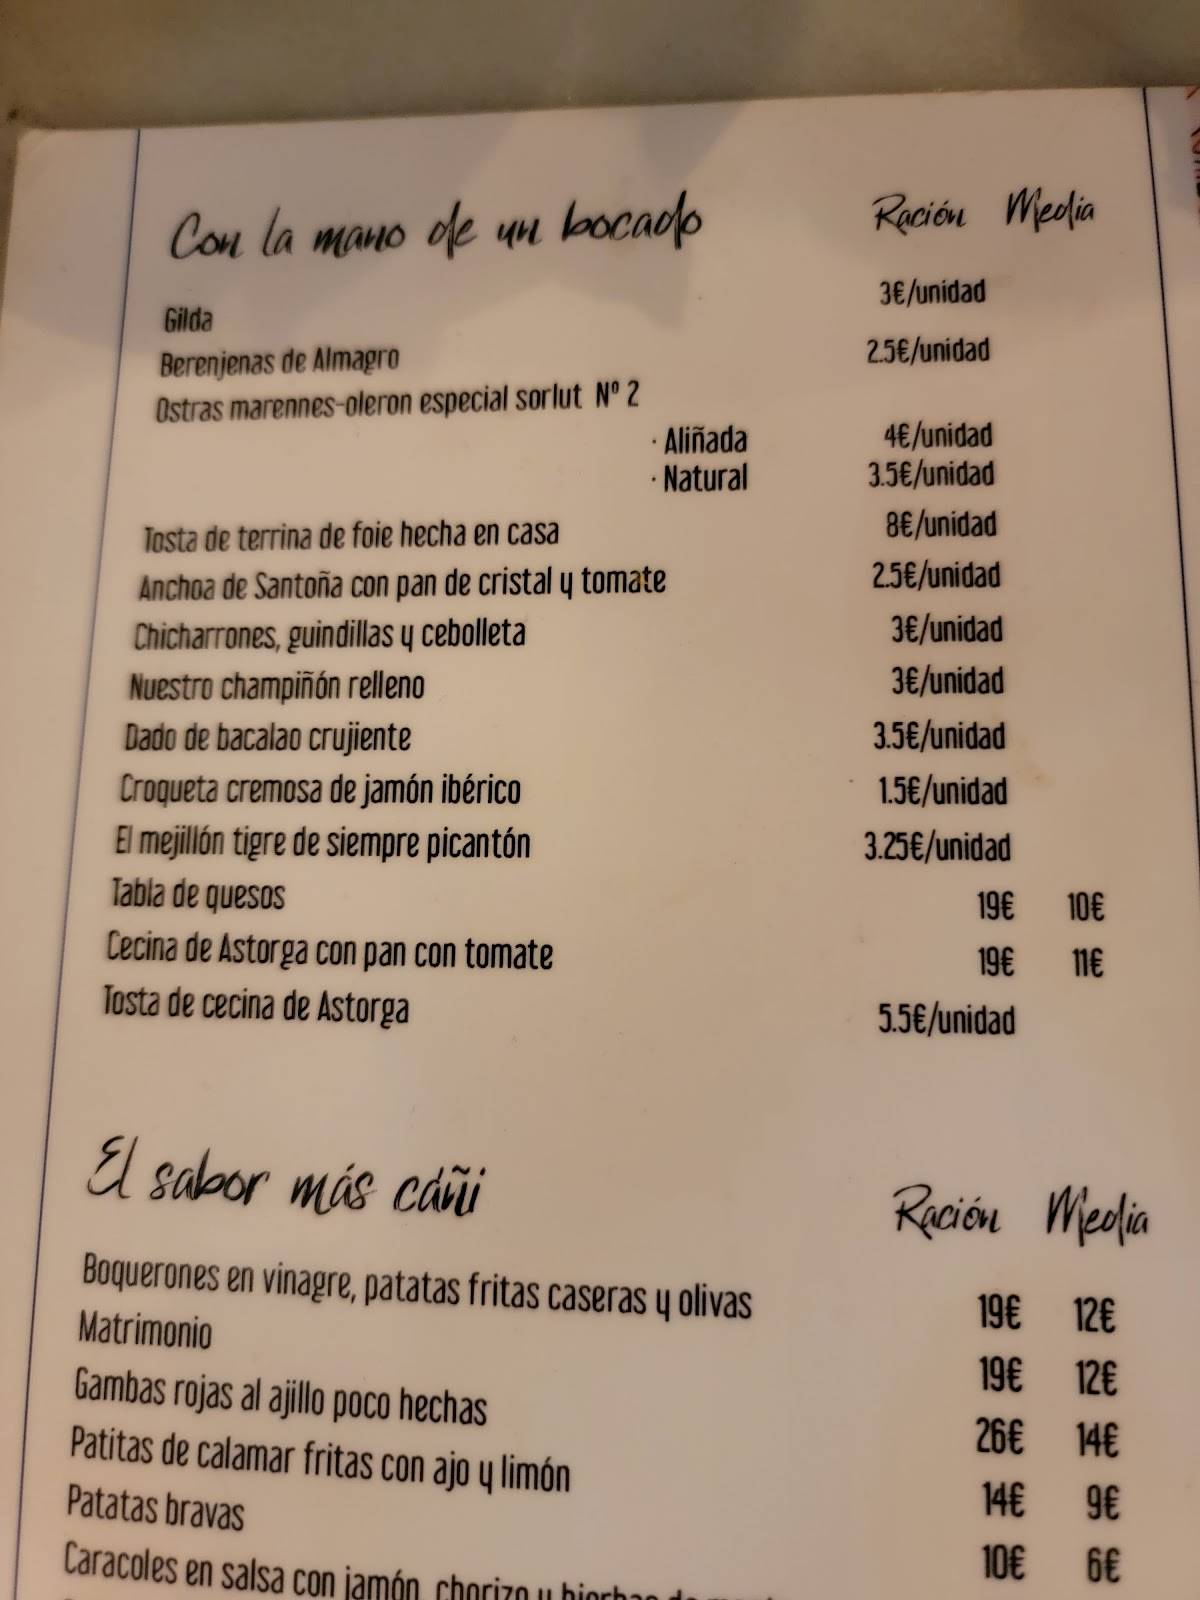 TABERNA DE LA ELISA, Madrid - Centro - Comentários de Restaurantes